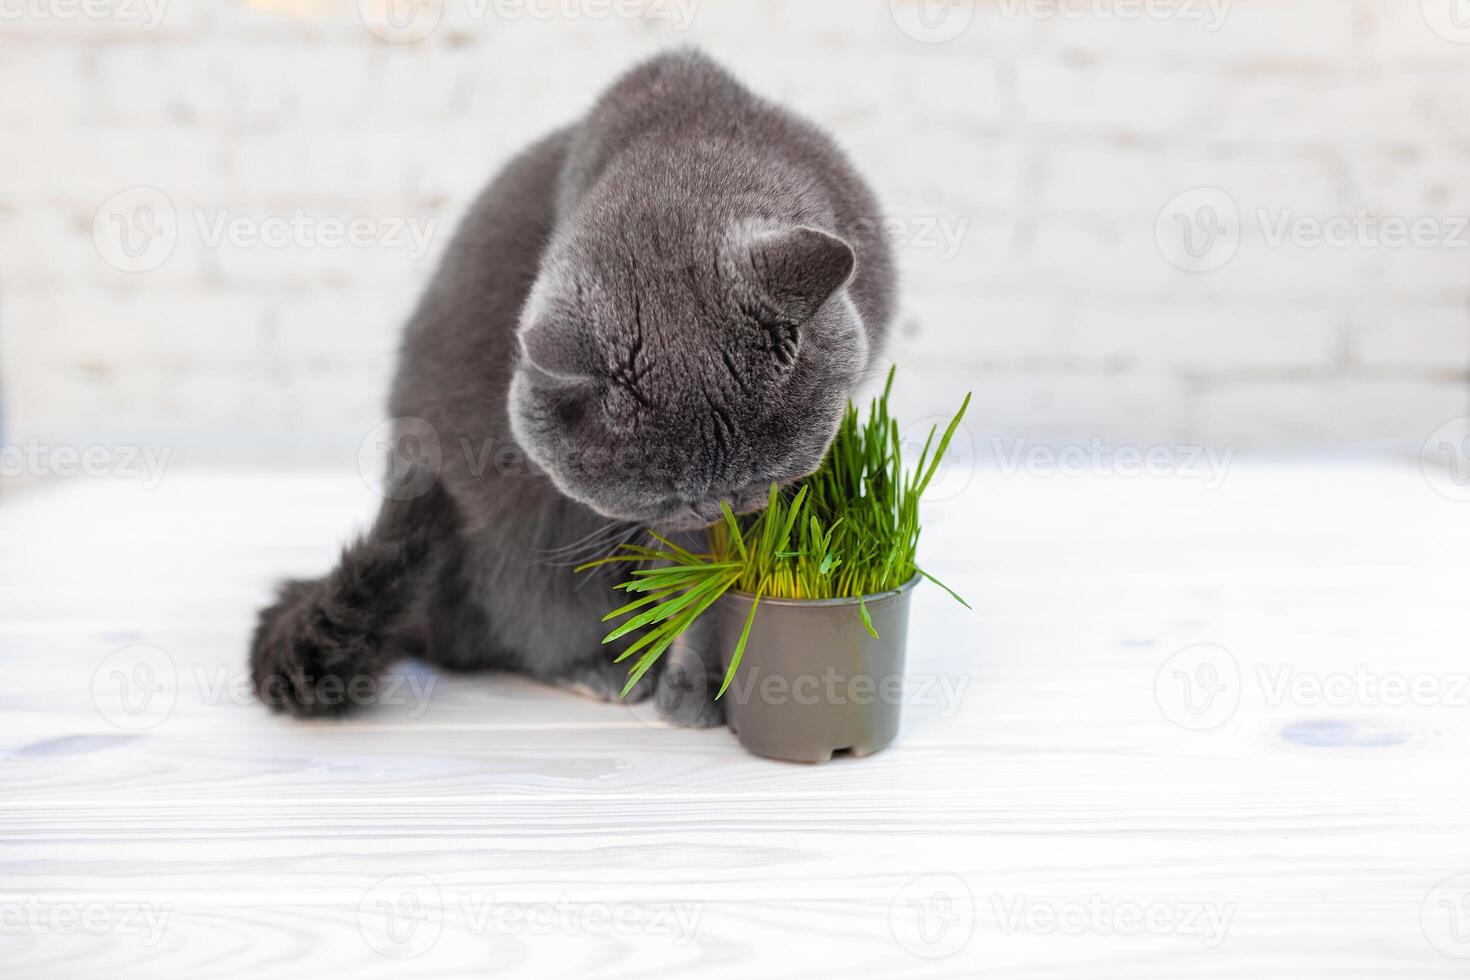 británico cabello corto gato él come útil rico en vitaminas césped en un maceta desde un mascota tienda. foto